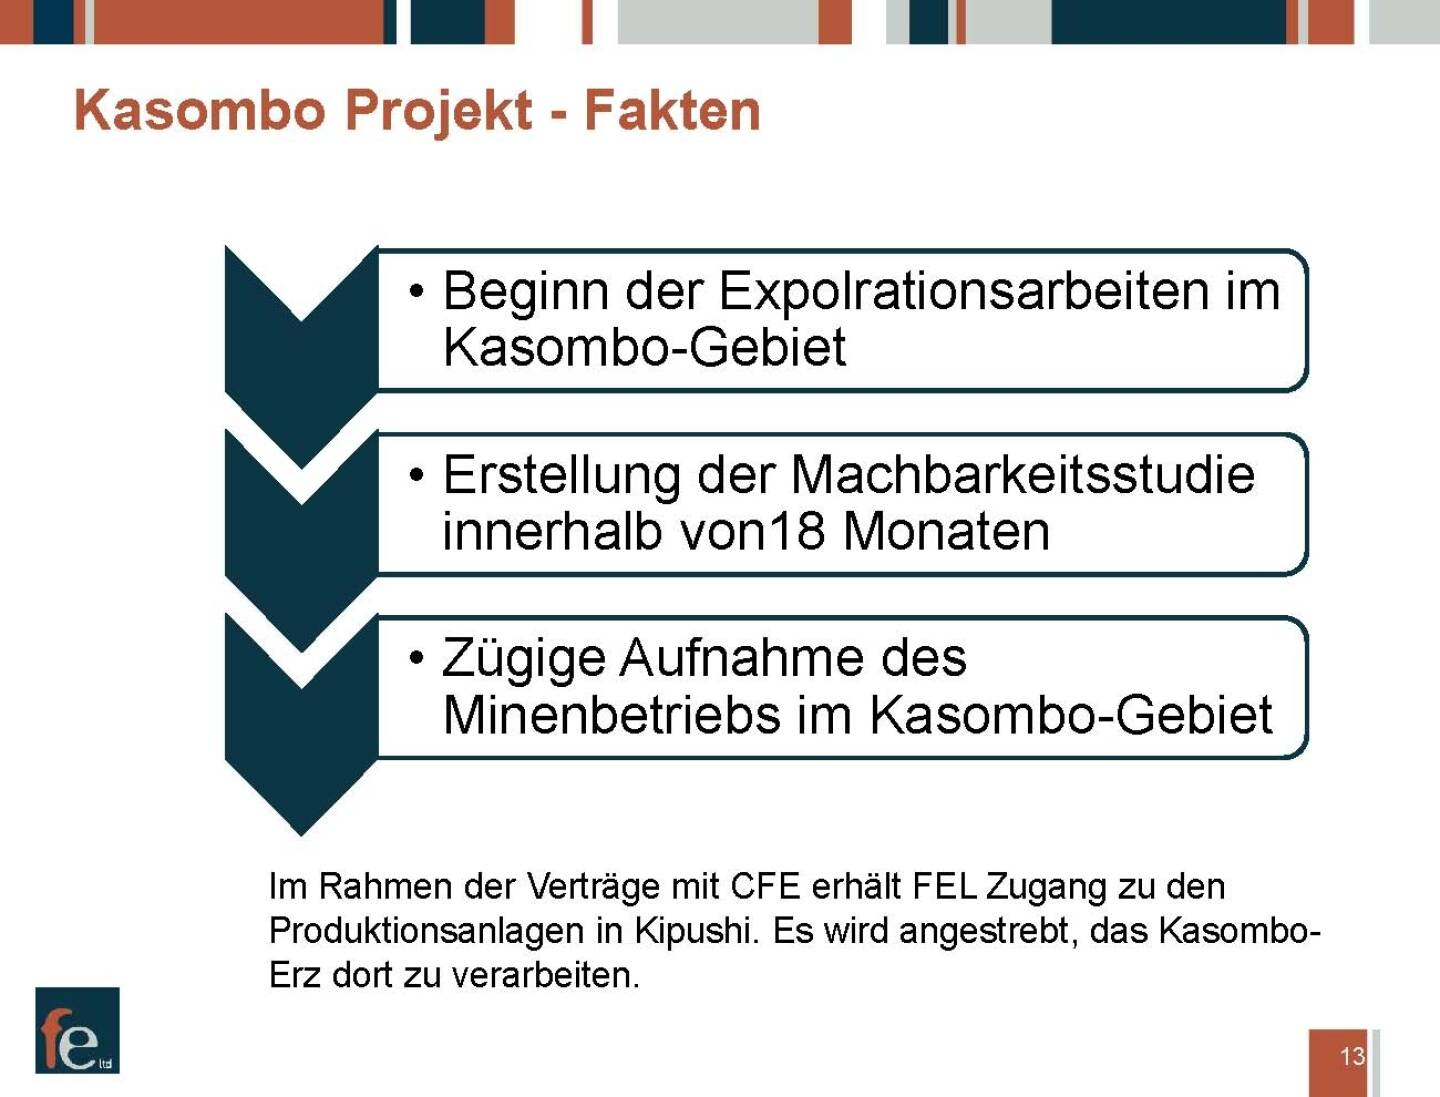 Präsentation FE Limited - Kasombo Projekt Fakten